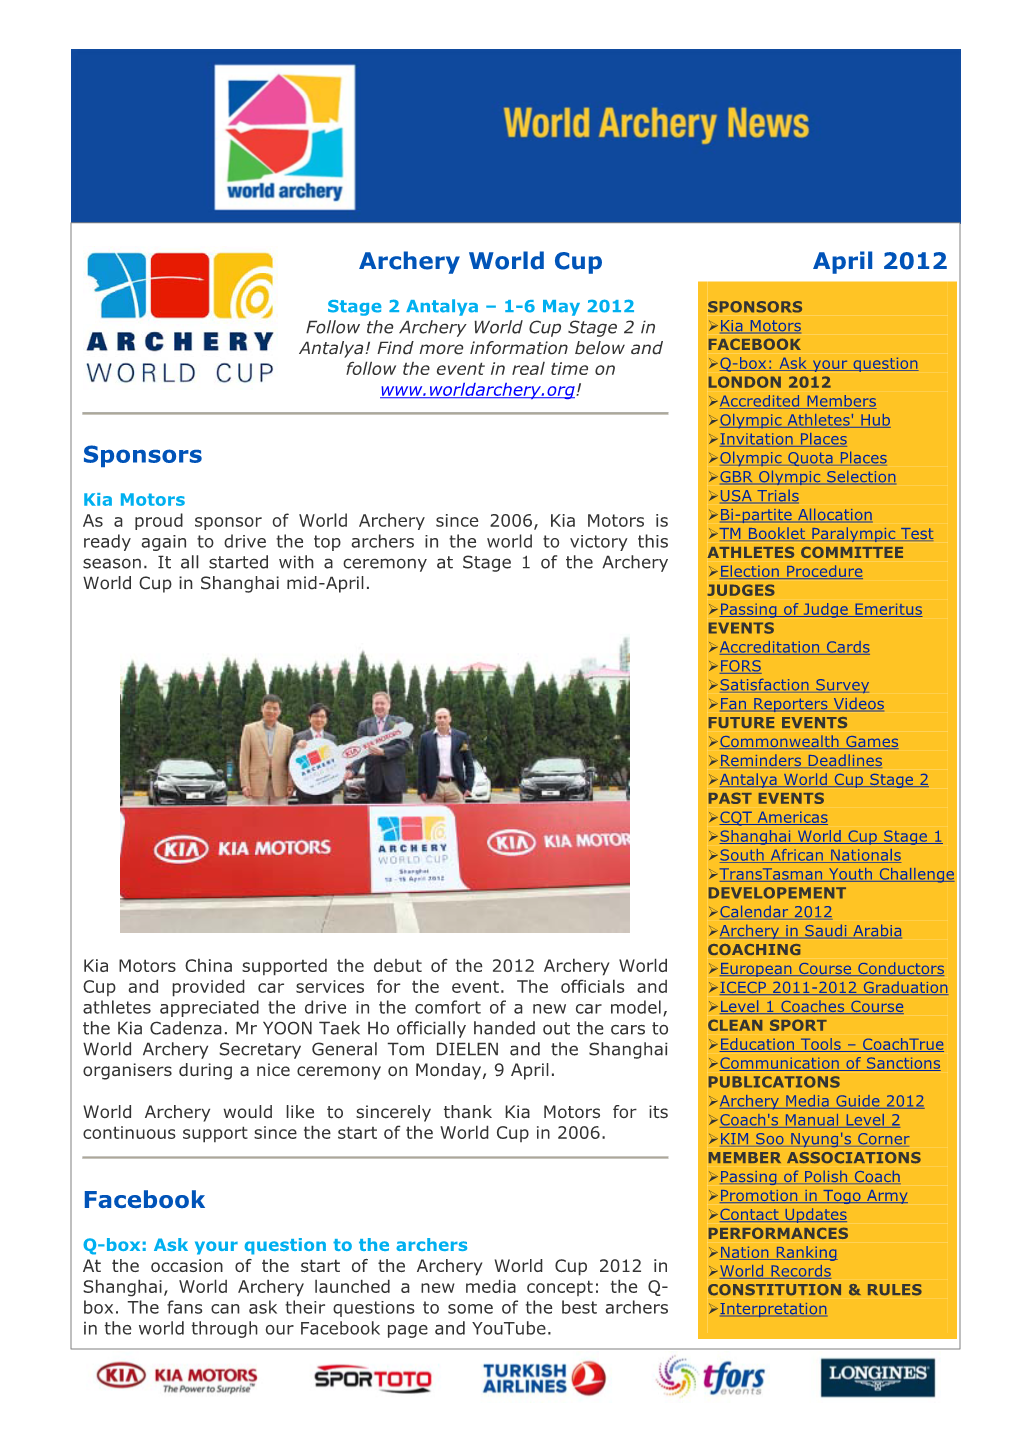 Archery World Cup Sponsors Facebook April 2012